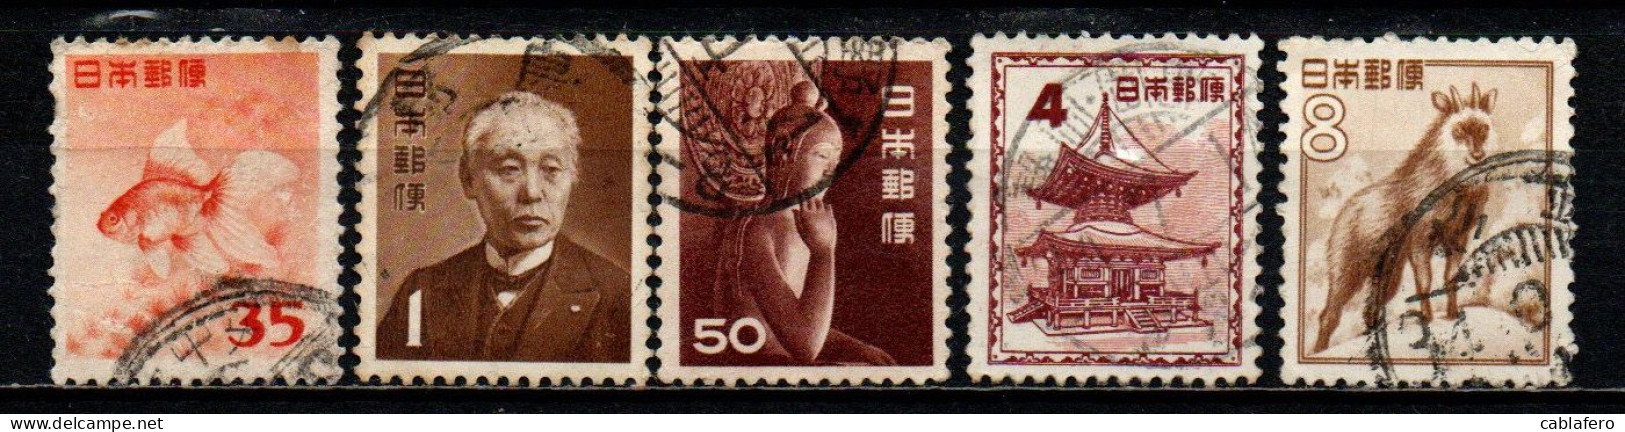  GIAPPONE - 1952 -  HISOKA MAEJIMA - ANTILOPE GIAPPONESE - PESCE ORO - USATI - Used Stamps